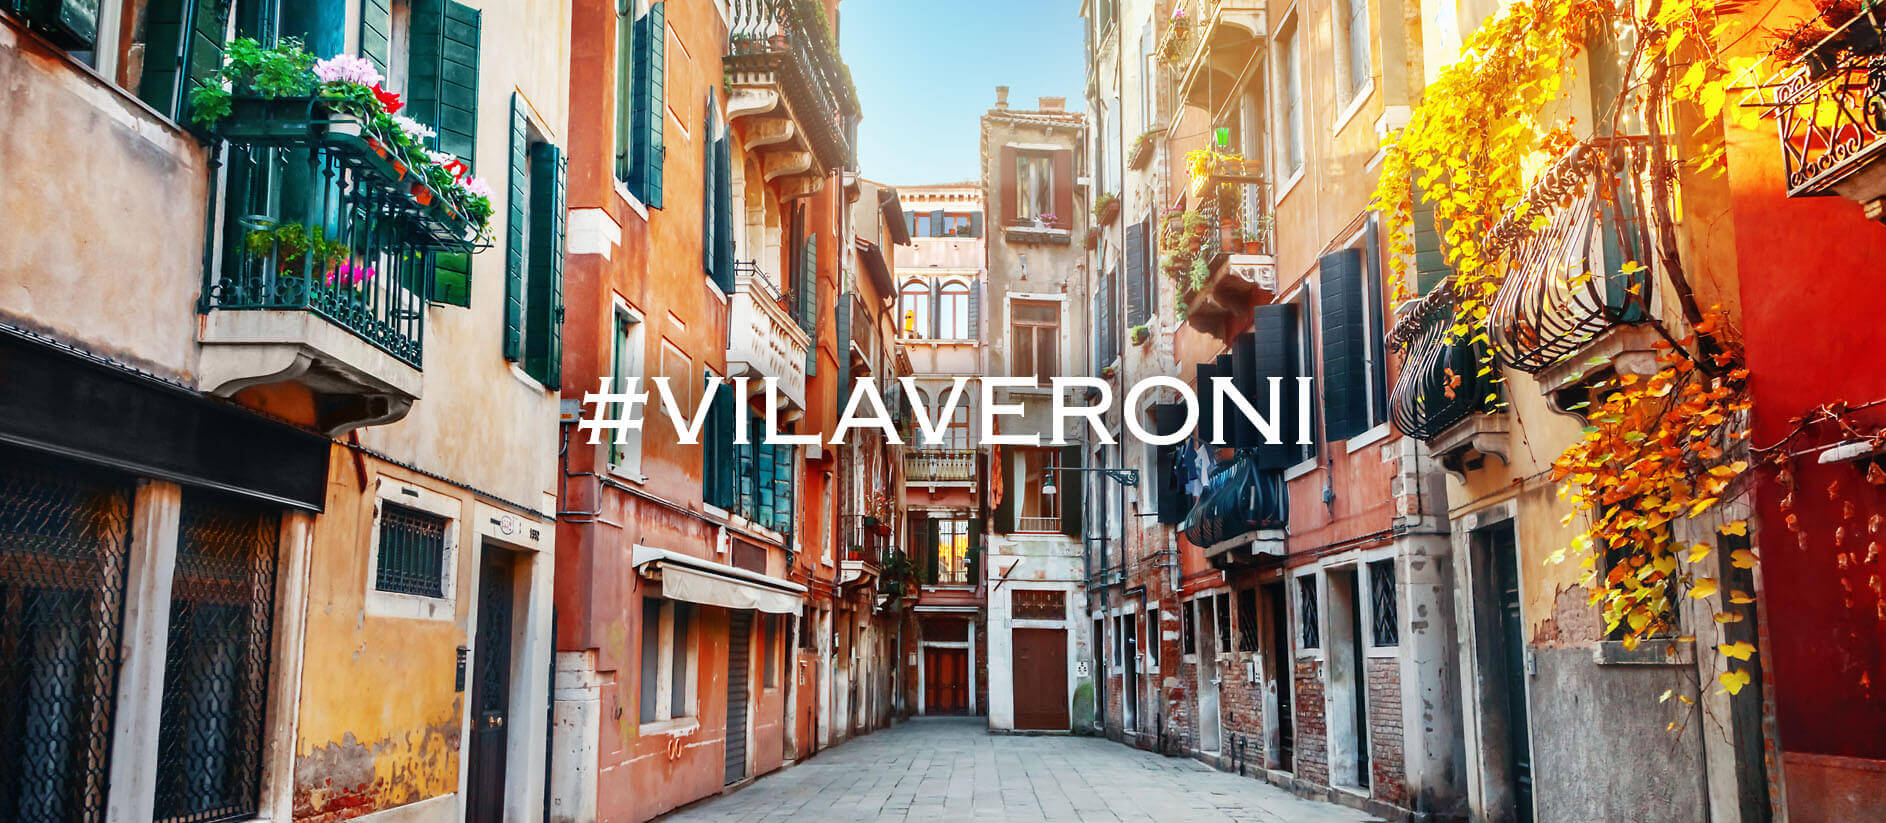 hashtag vilaveroni image d'illustration ville italienne